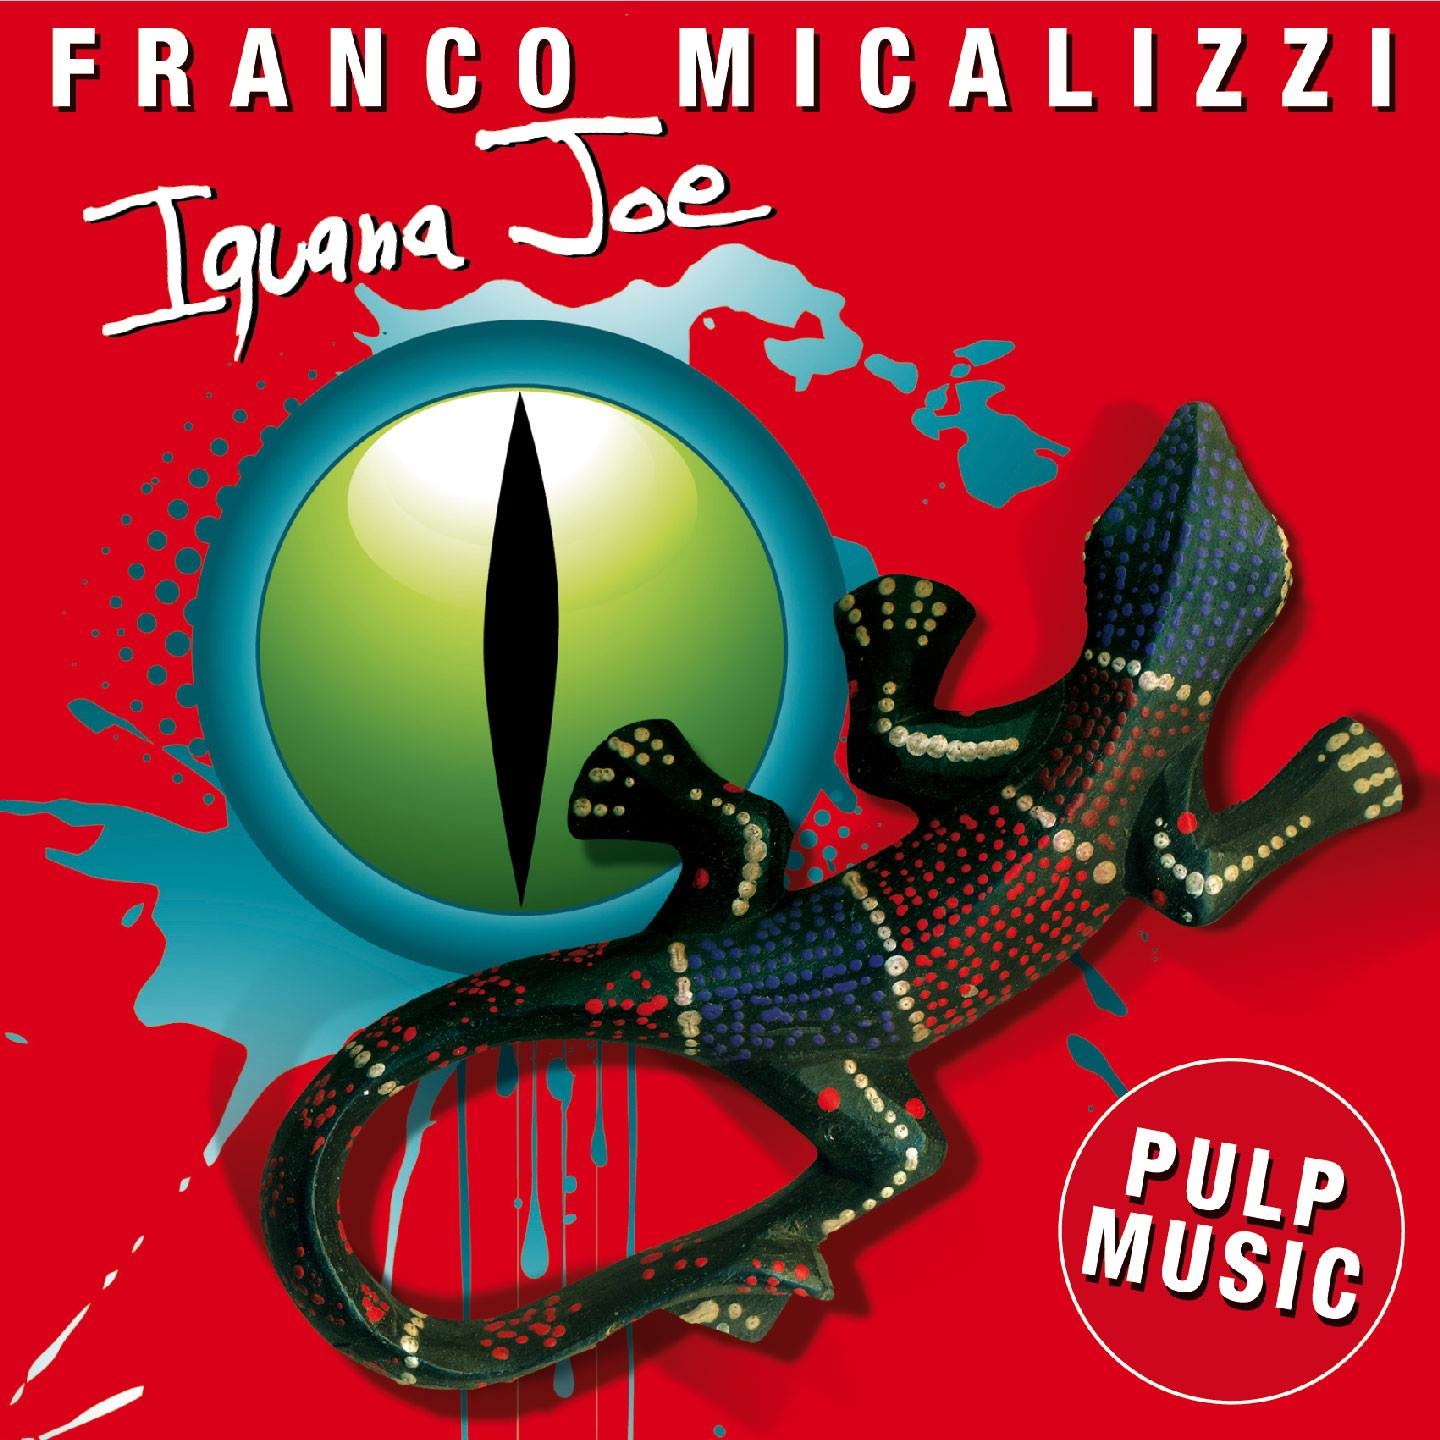 FUNKY ALLIGATOR e IGUANA JOE : Franco Micalizzi, Re indiscusso della Pulp Music